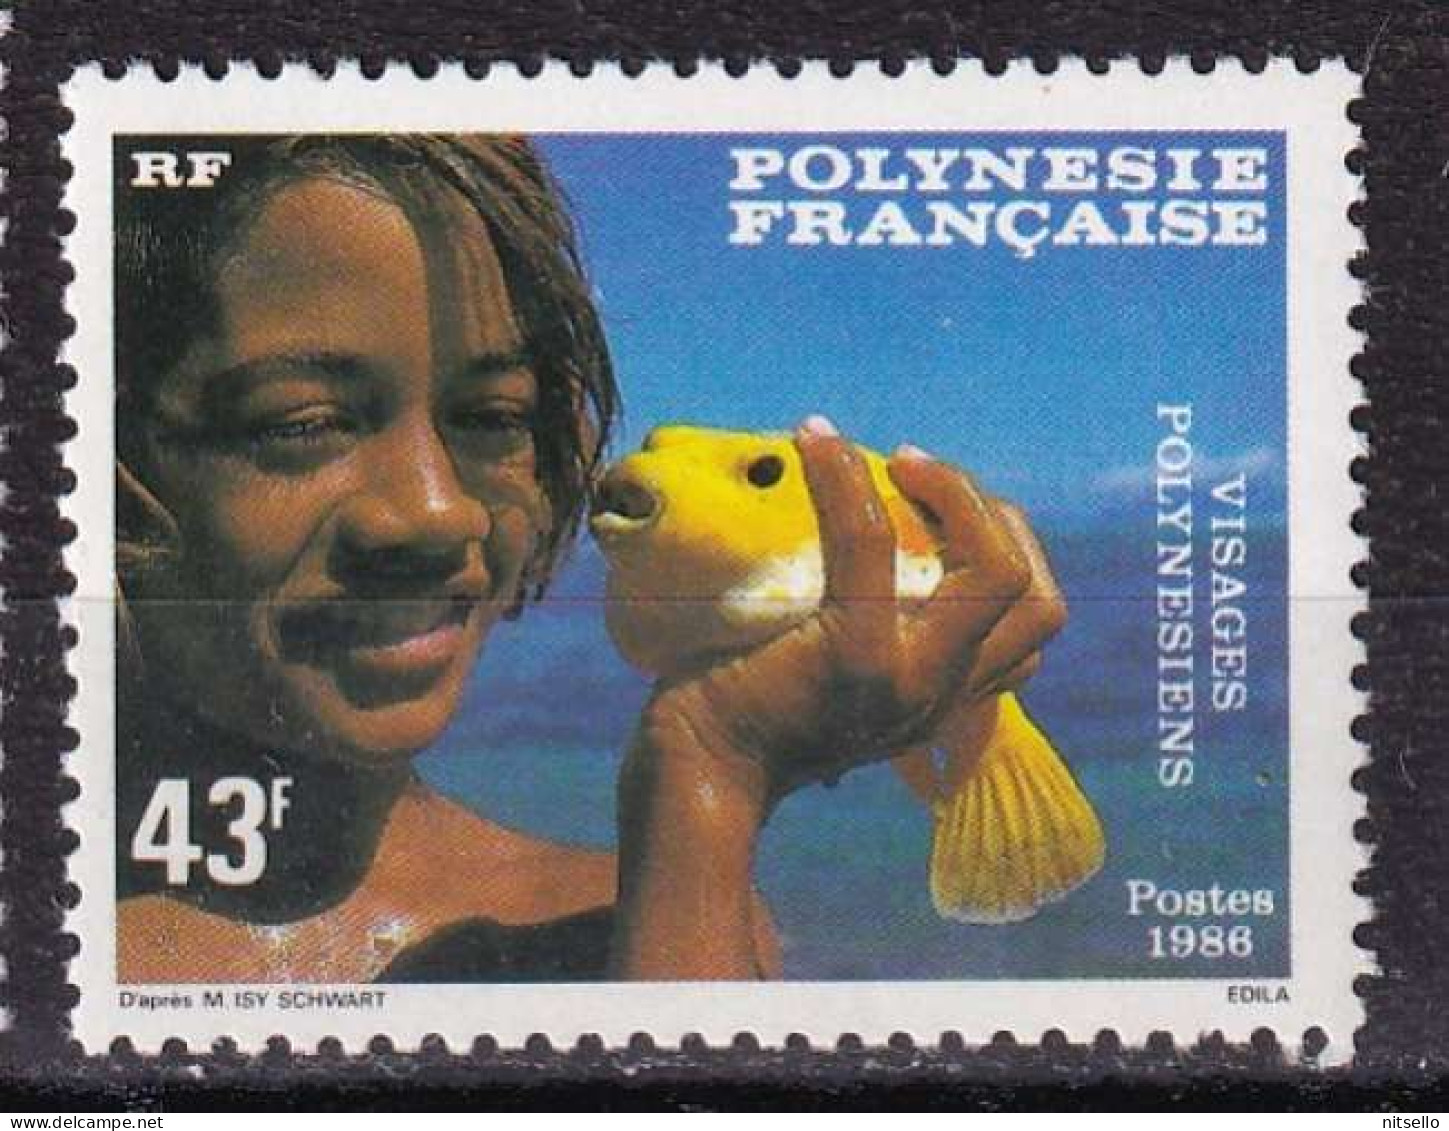 LOTE 2202 ///  (C020)  POLINESIA FRANCESA  - YVERT Nº: 249 **MHH  ¡¡¡ OFERTA - LIQUIDATION - JE LIQUIDE !!! - Used Stamps